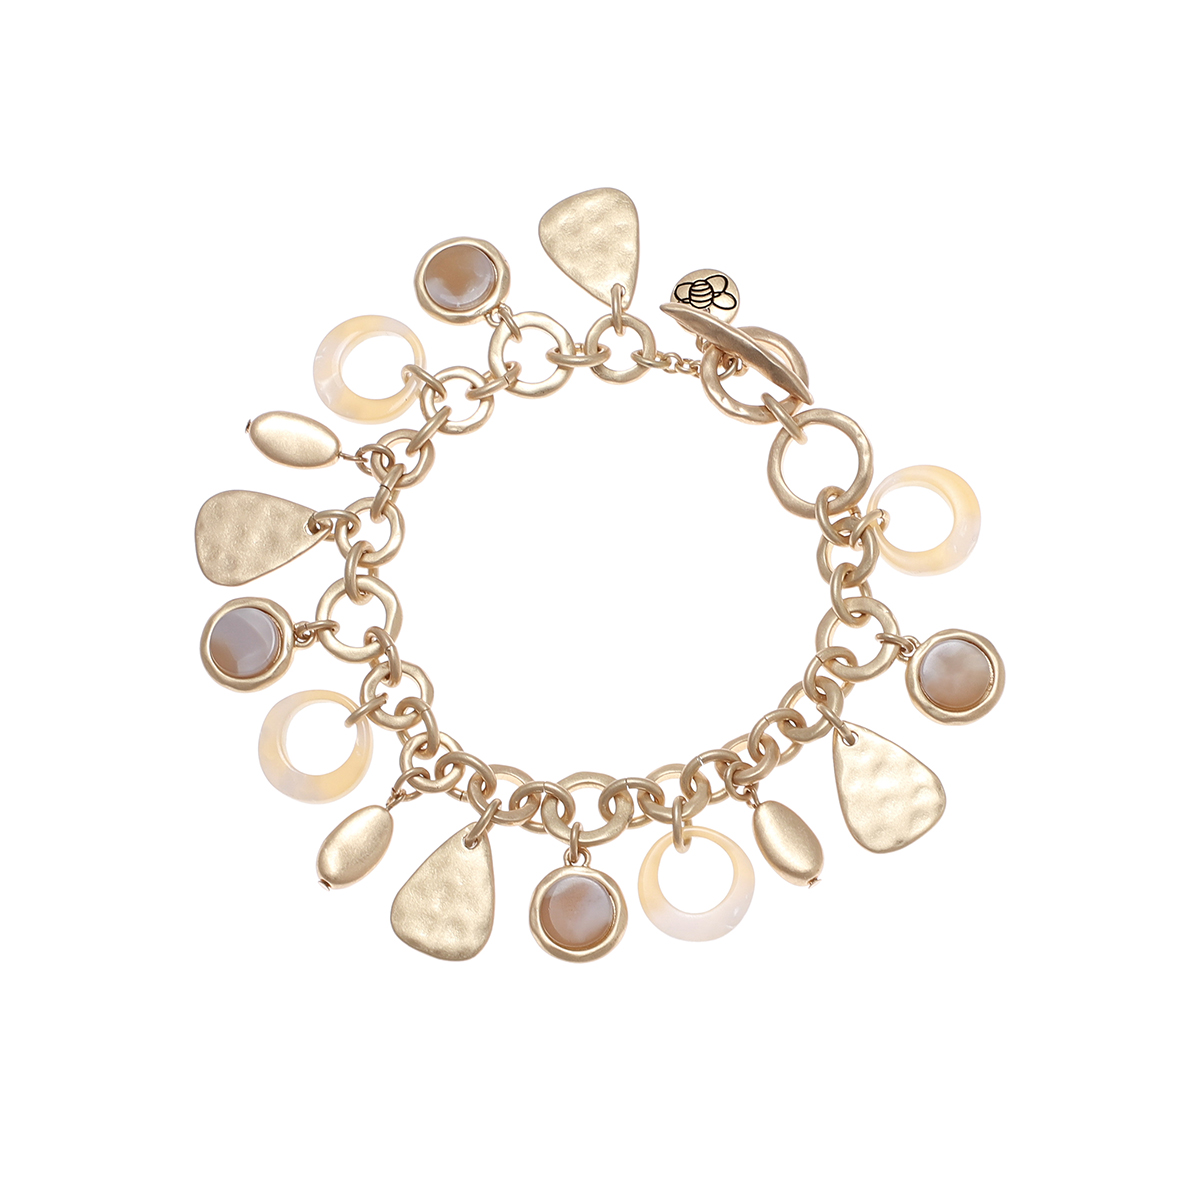 Bella Uno Worn Gold-Tone Dangle Charm Bracelet